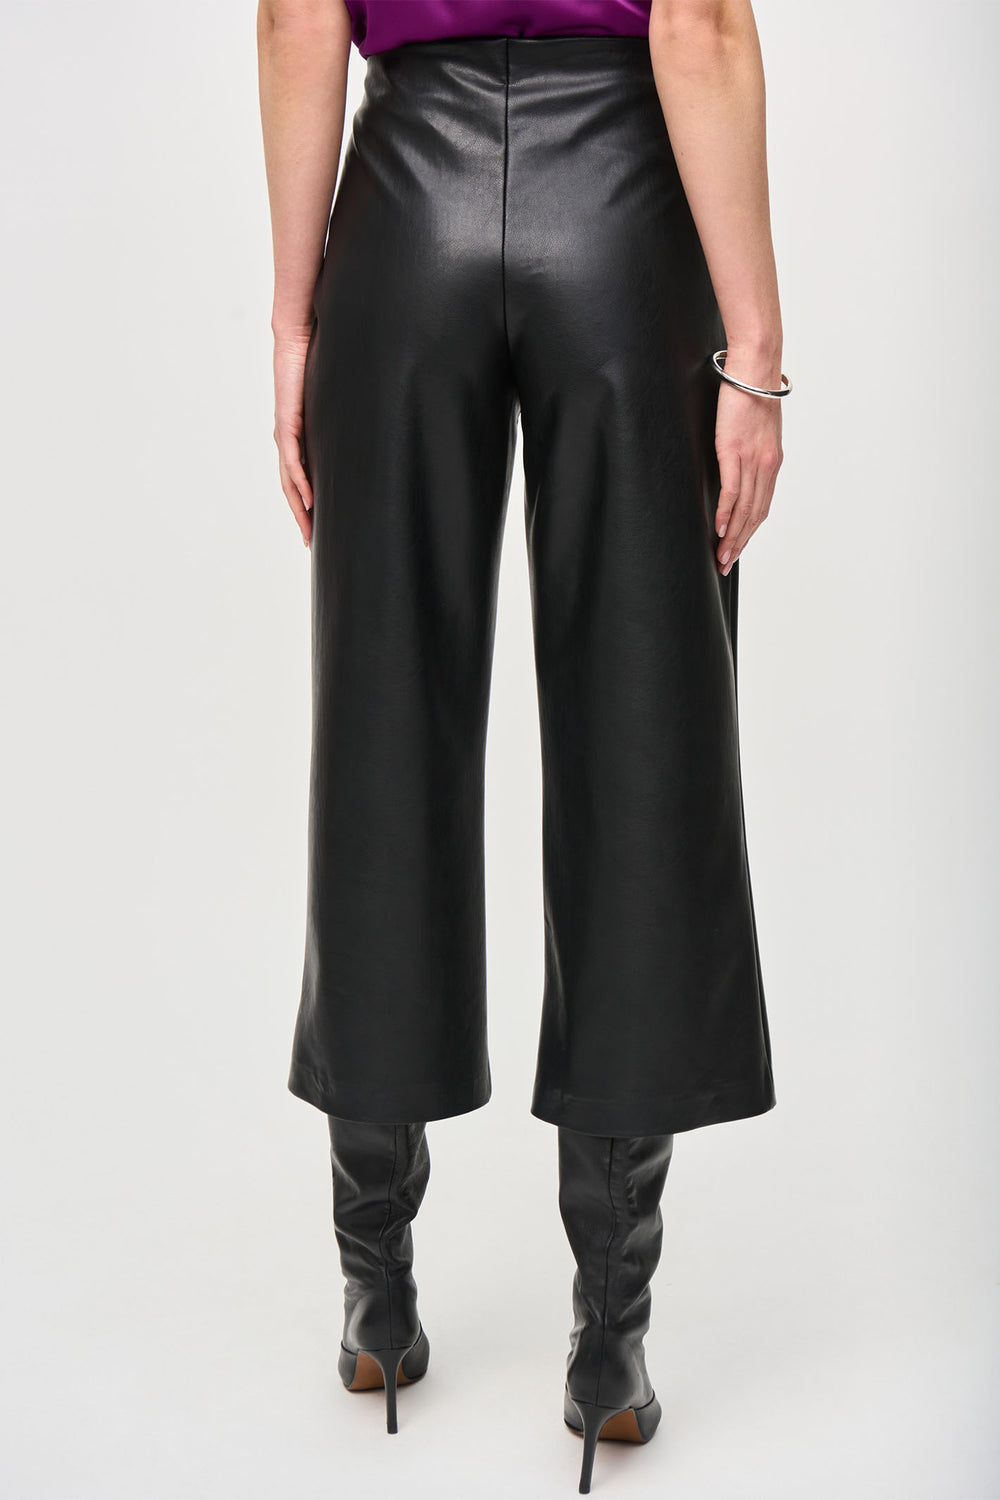 Joseph Ribkoff Culotte Trousers Black Faux Leather Pull-On 243042 - Olivia Grace Fashion